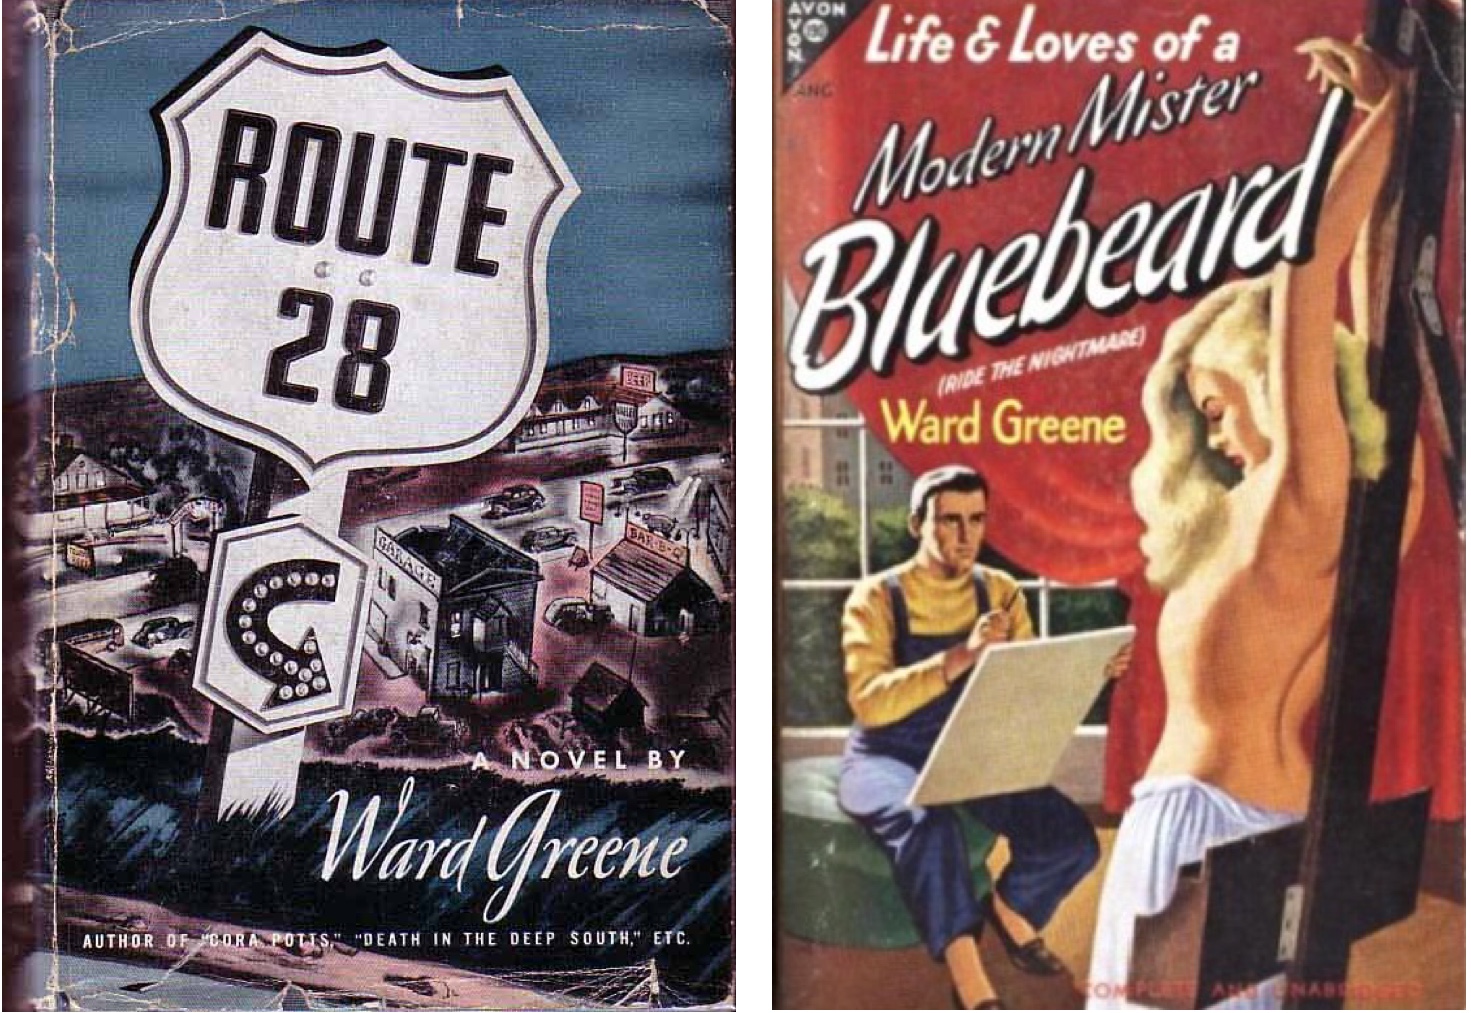 Ward Greene skrev romaner som Route 28 och Ride the Nightmare